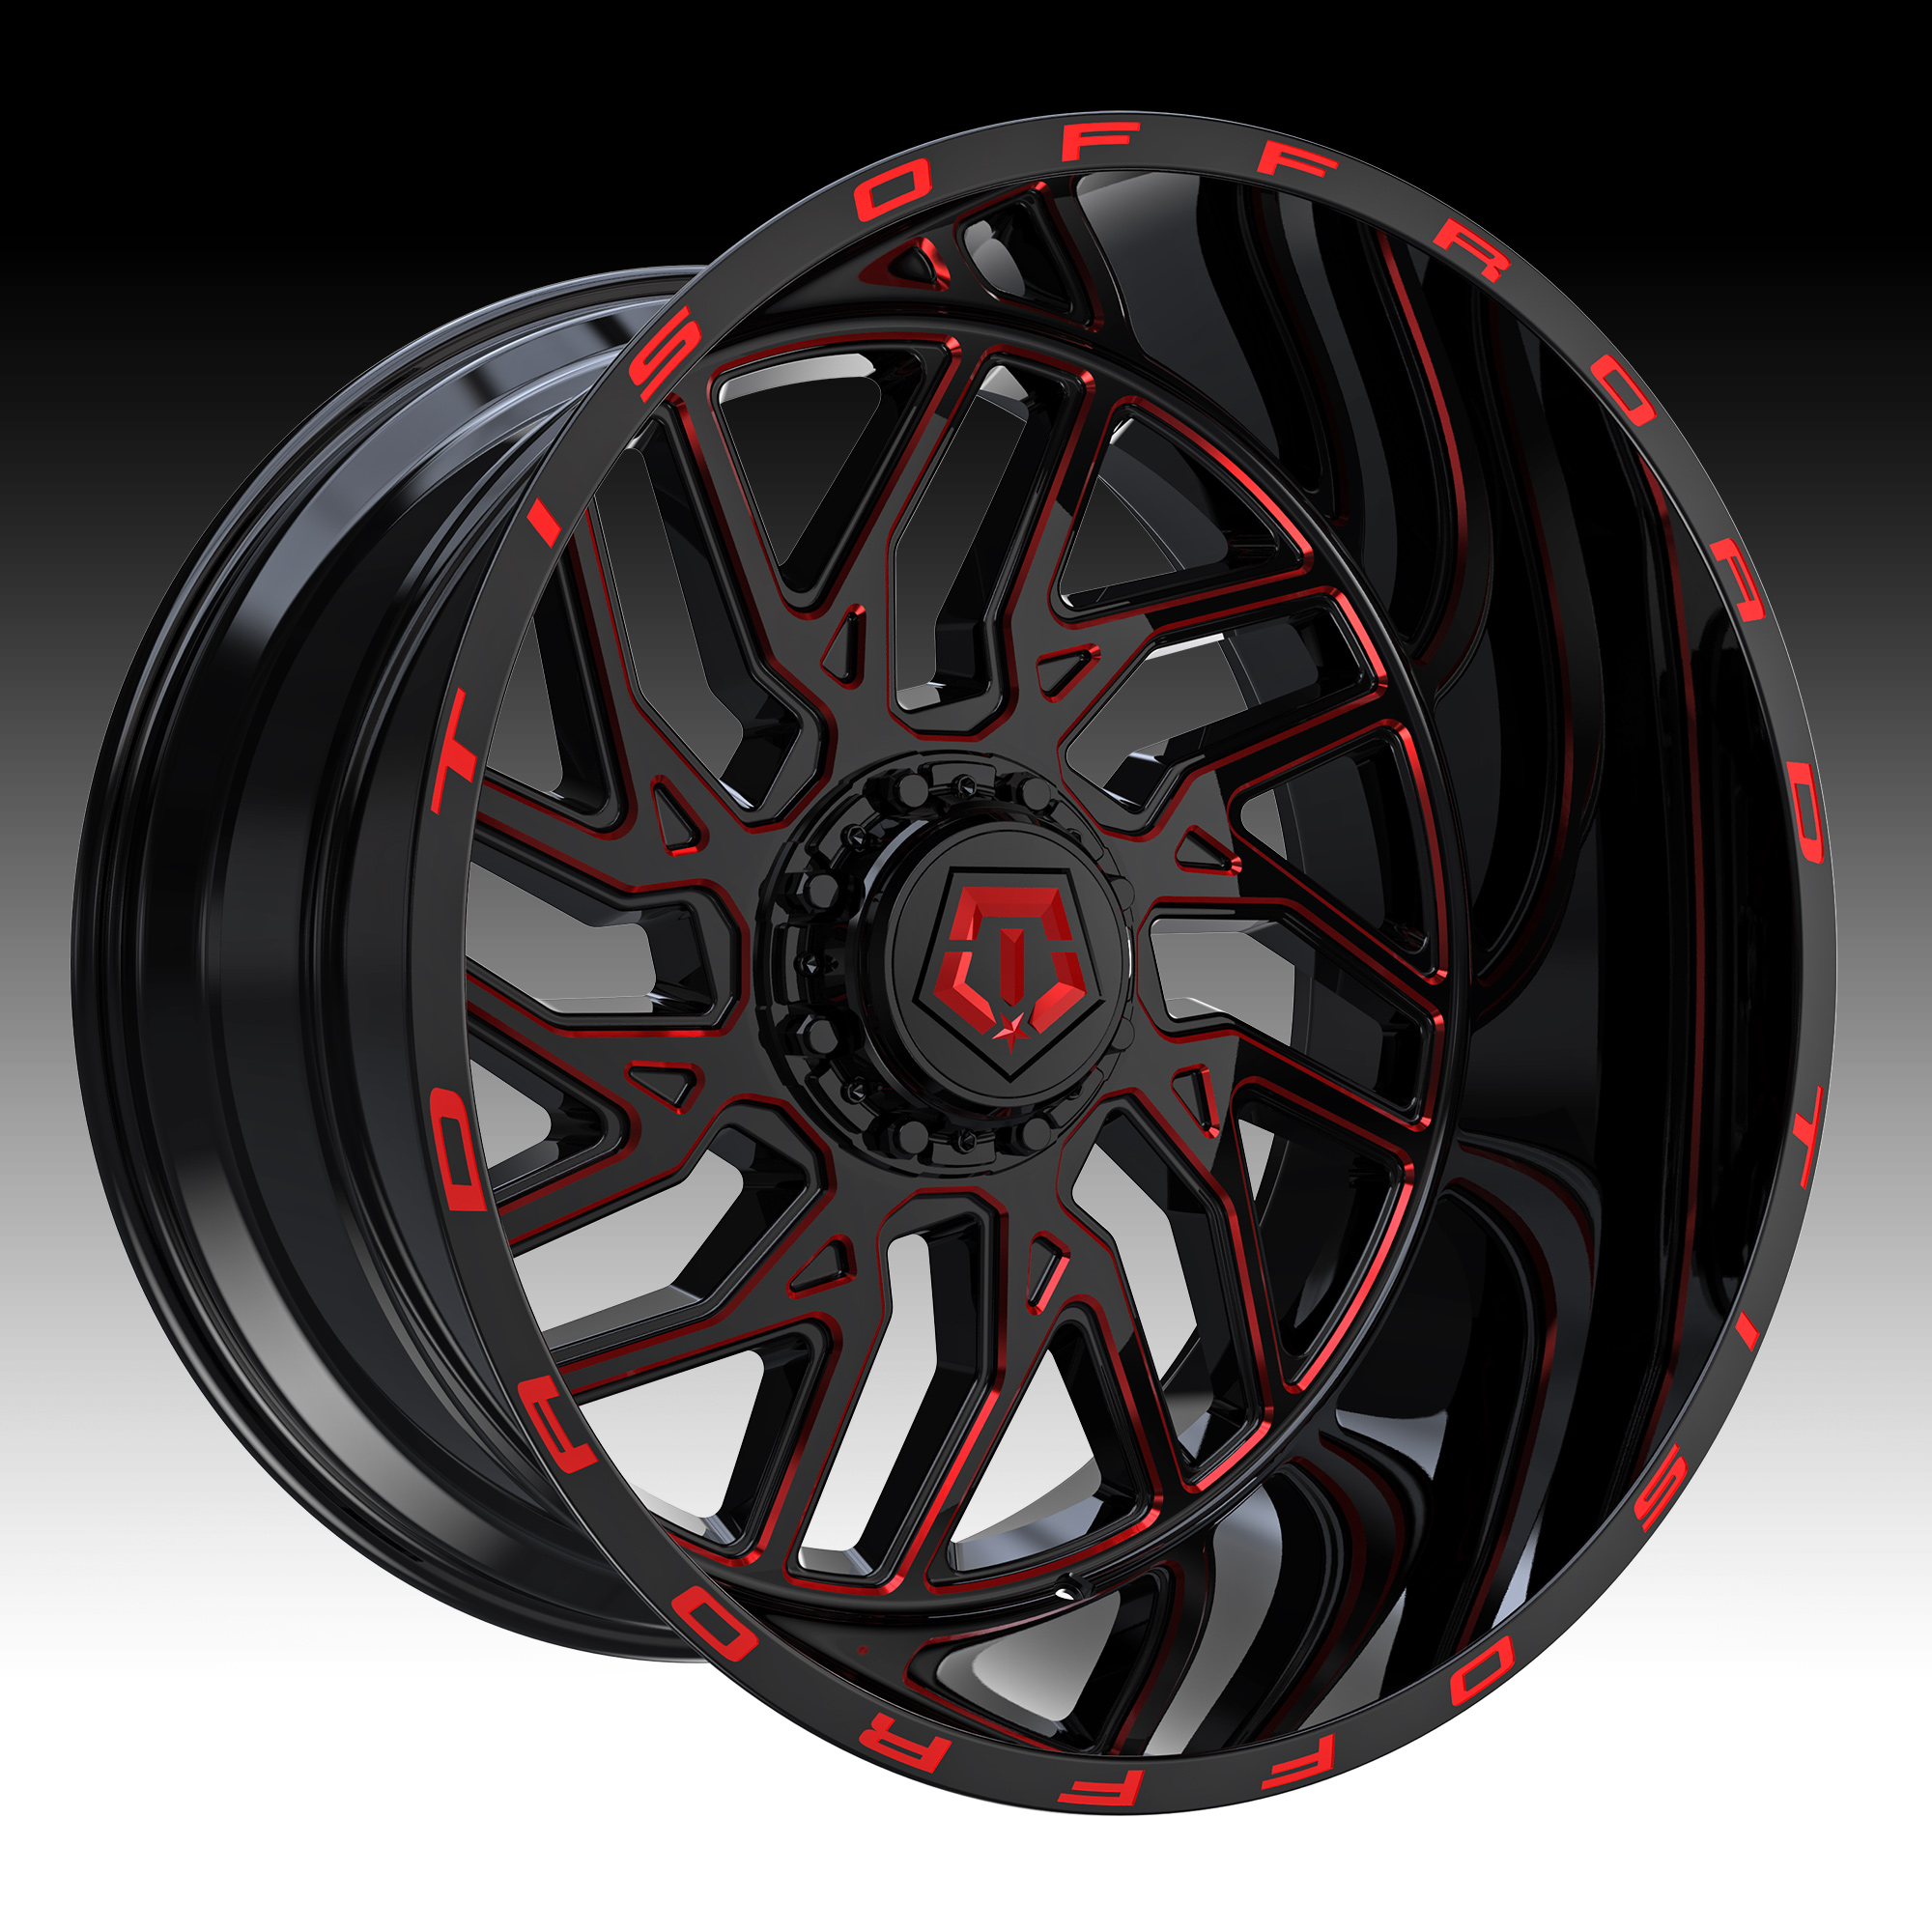 Wheels 544BMR Gloss Black Milled Red Tint Custom Wheels Rims - 544BMR Custom Wheels Rims - Custom Wheels for Trucks, Jeeps, SUVs and Passenger